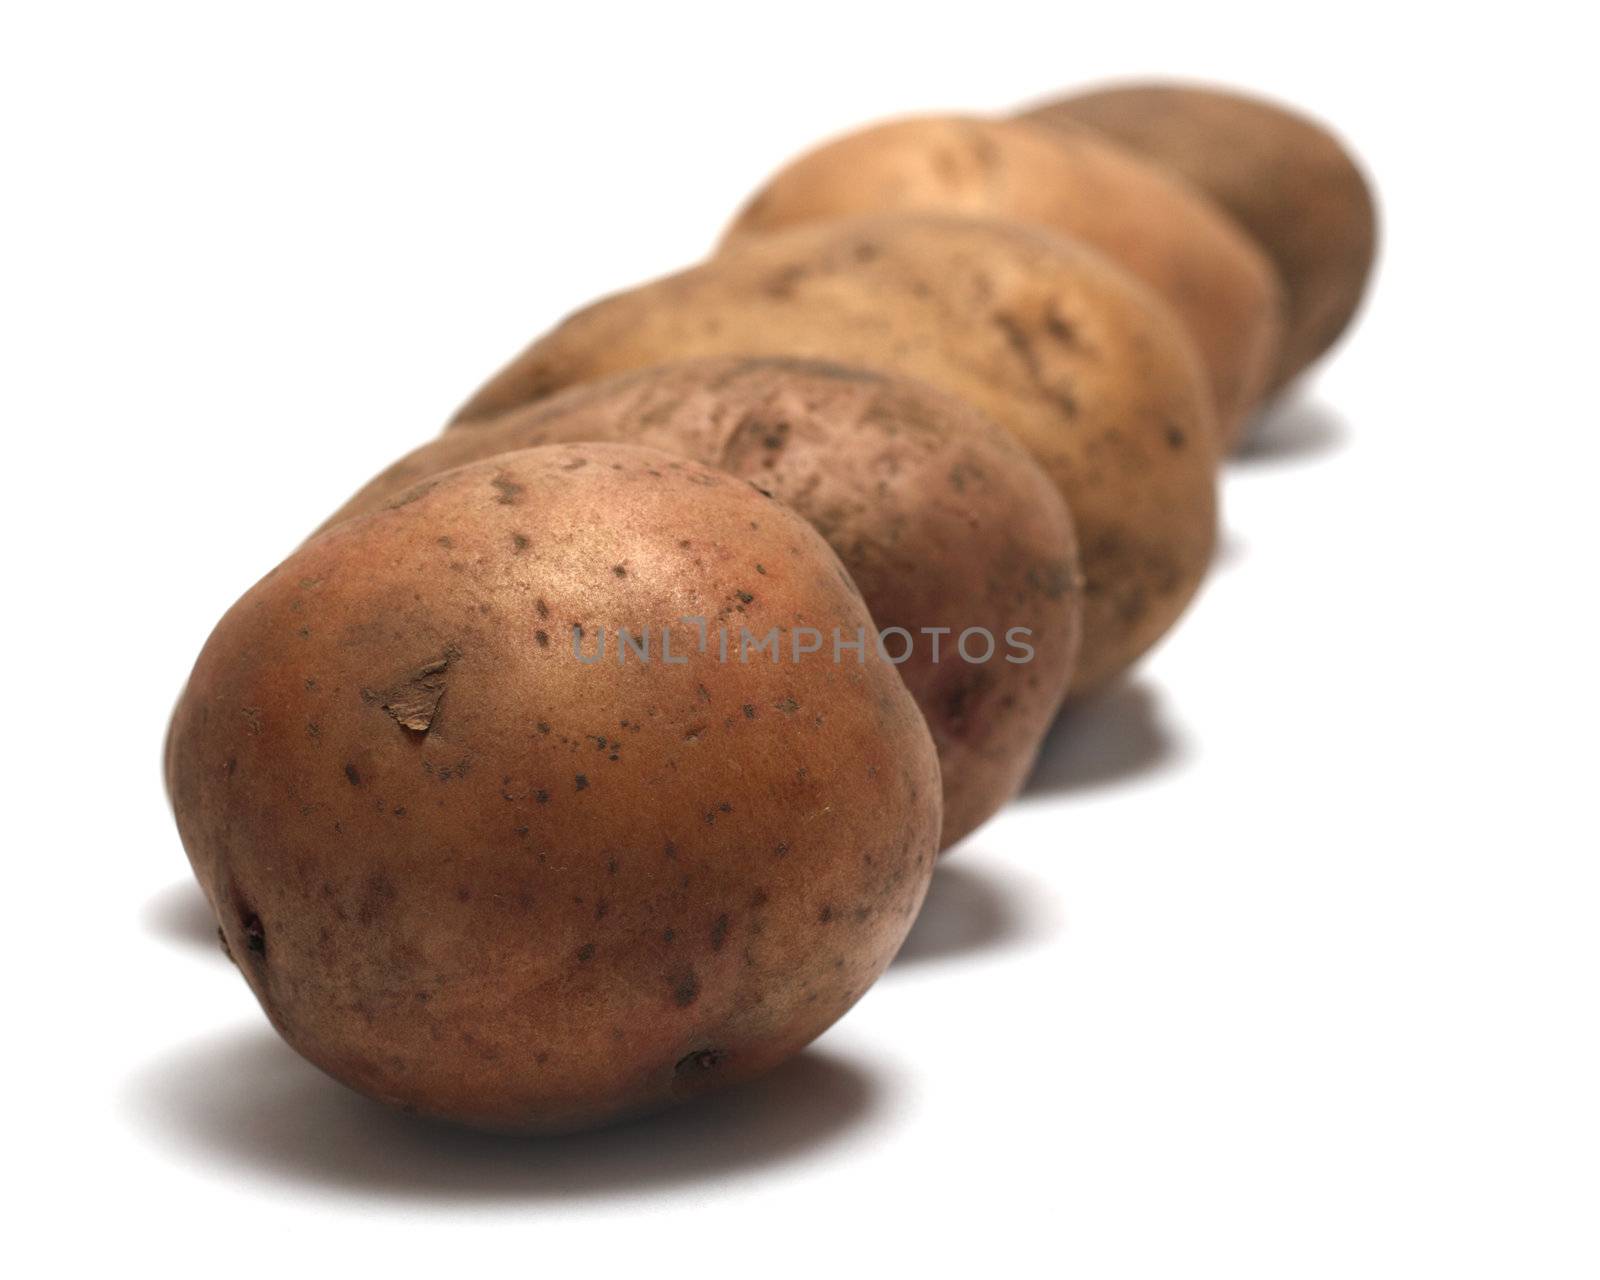 Row of organic raw potatoes by Gdolgikh